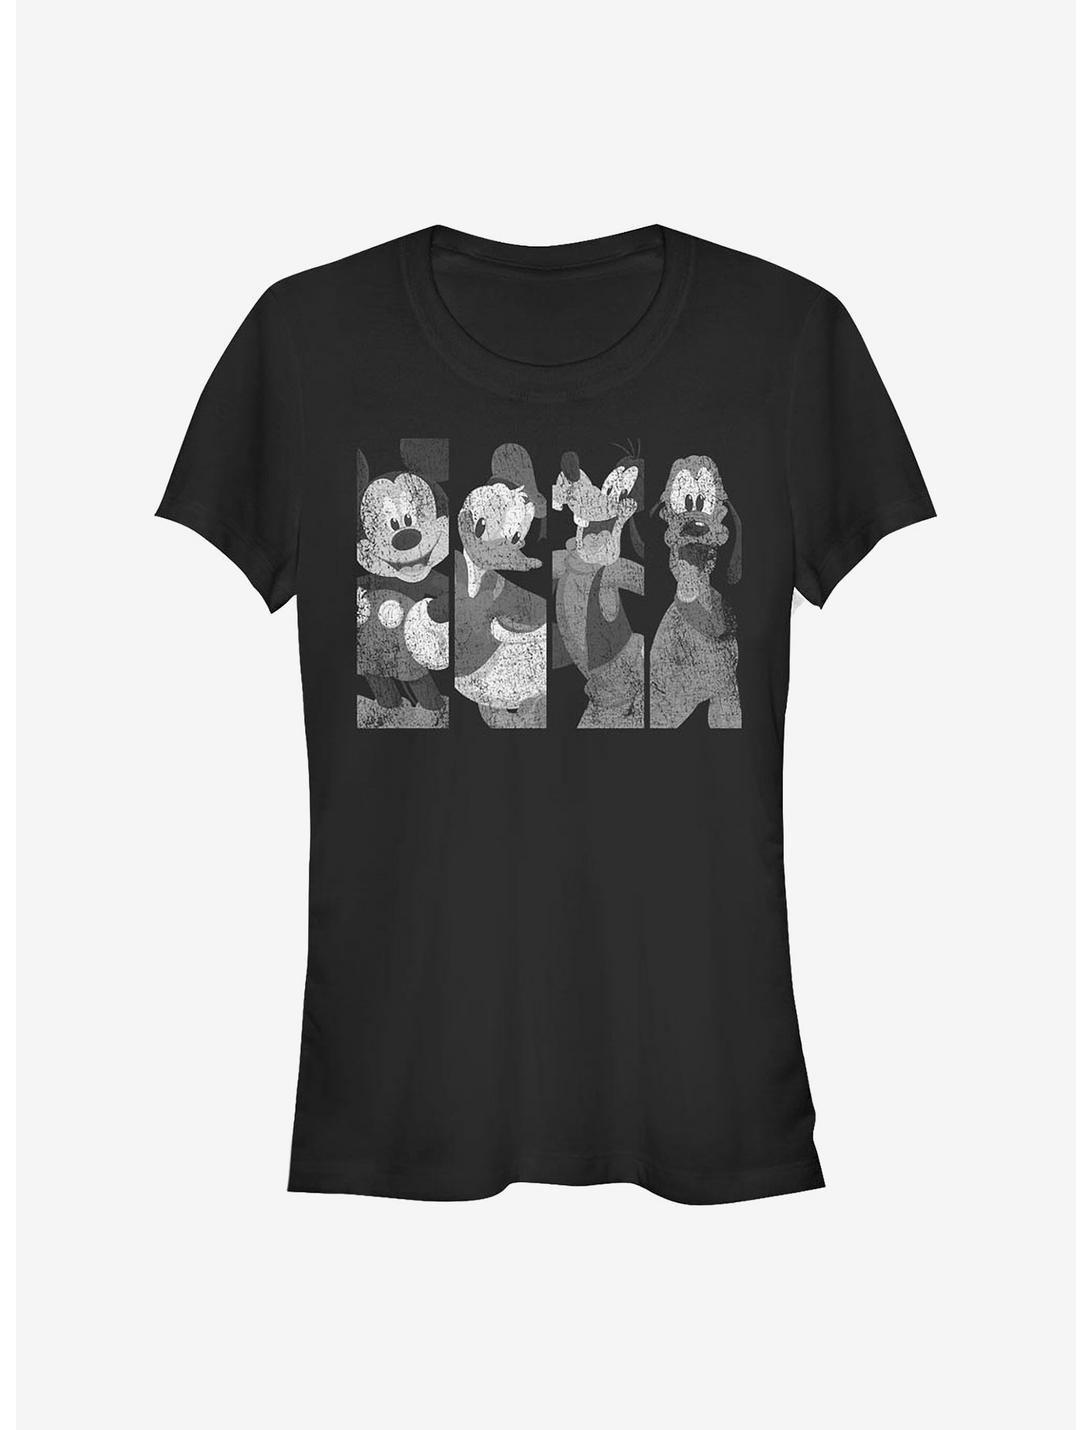 Disney Mickey Mouse Bro Time Girls T-Shirt, BLACK, hi-res